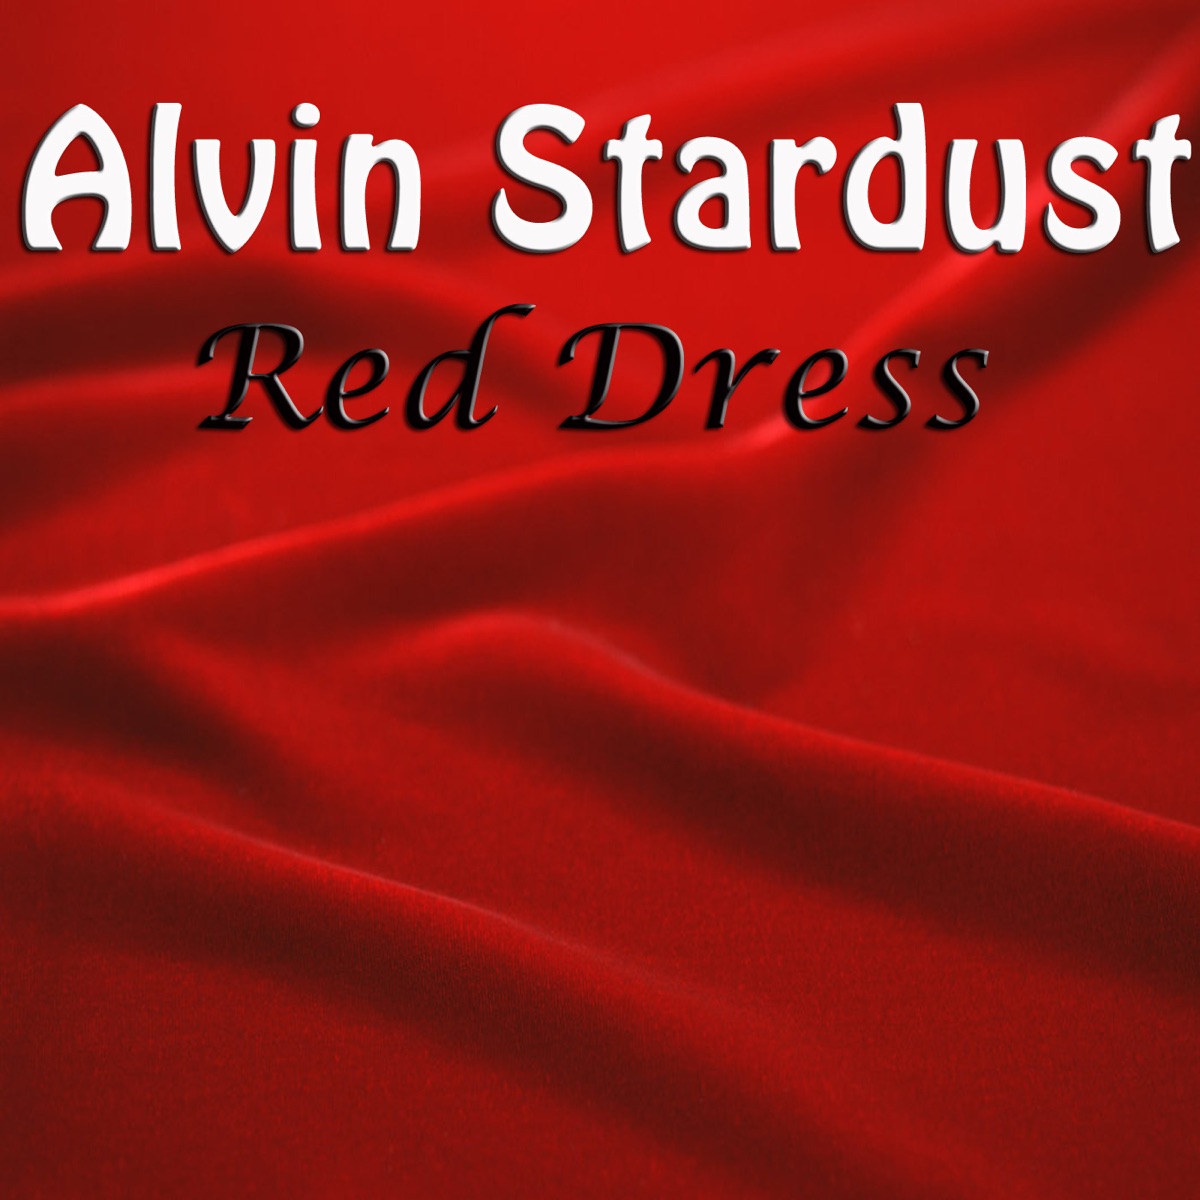 Red Dress - Album by Alvin Stardust - Apple Music